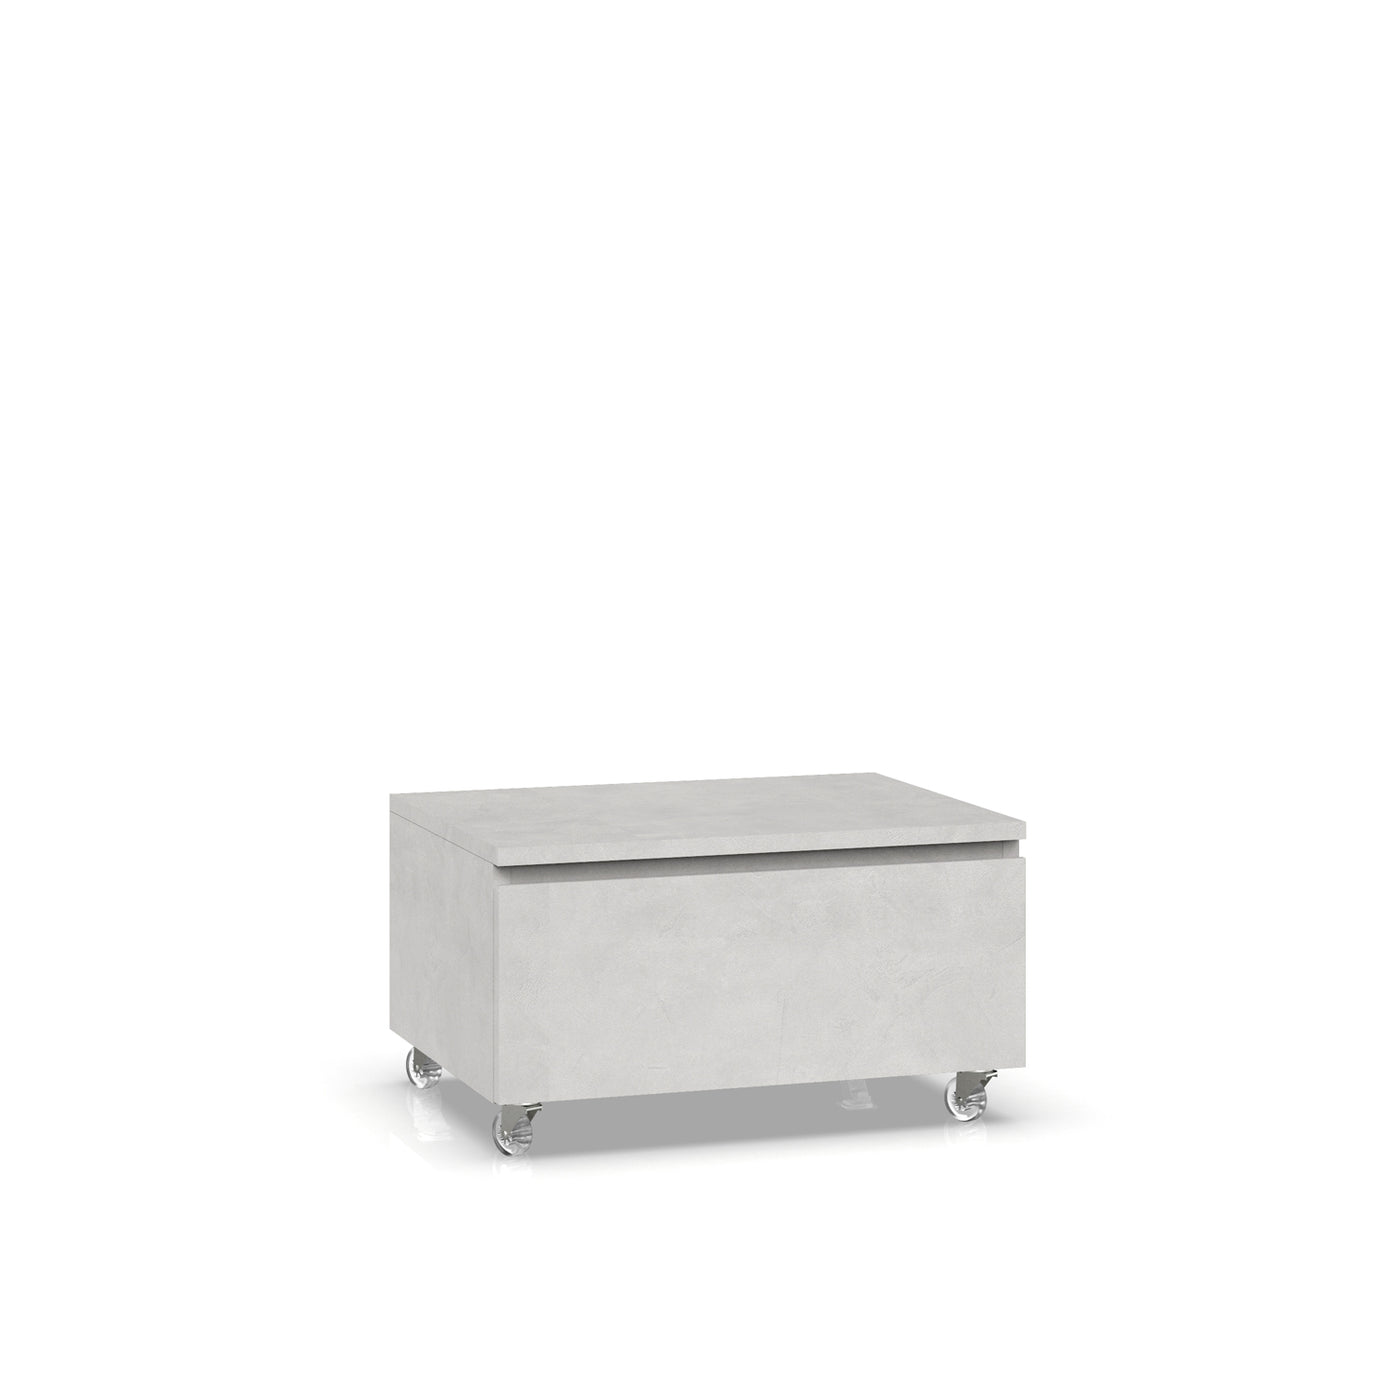 YOKA stone white chest of drawers 60 cm